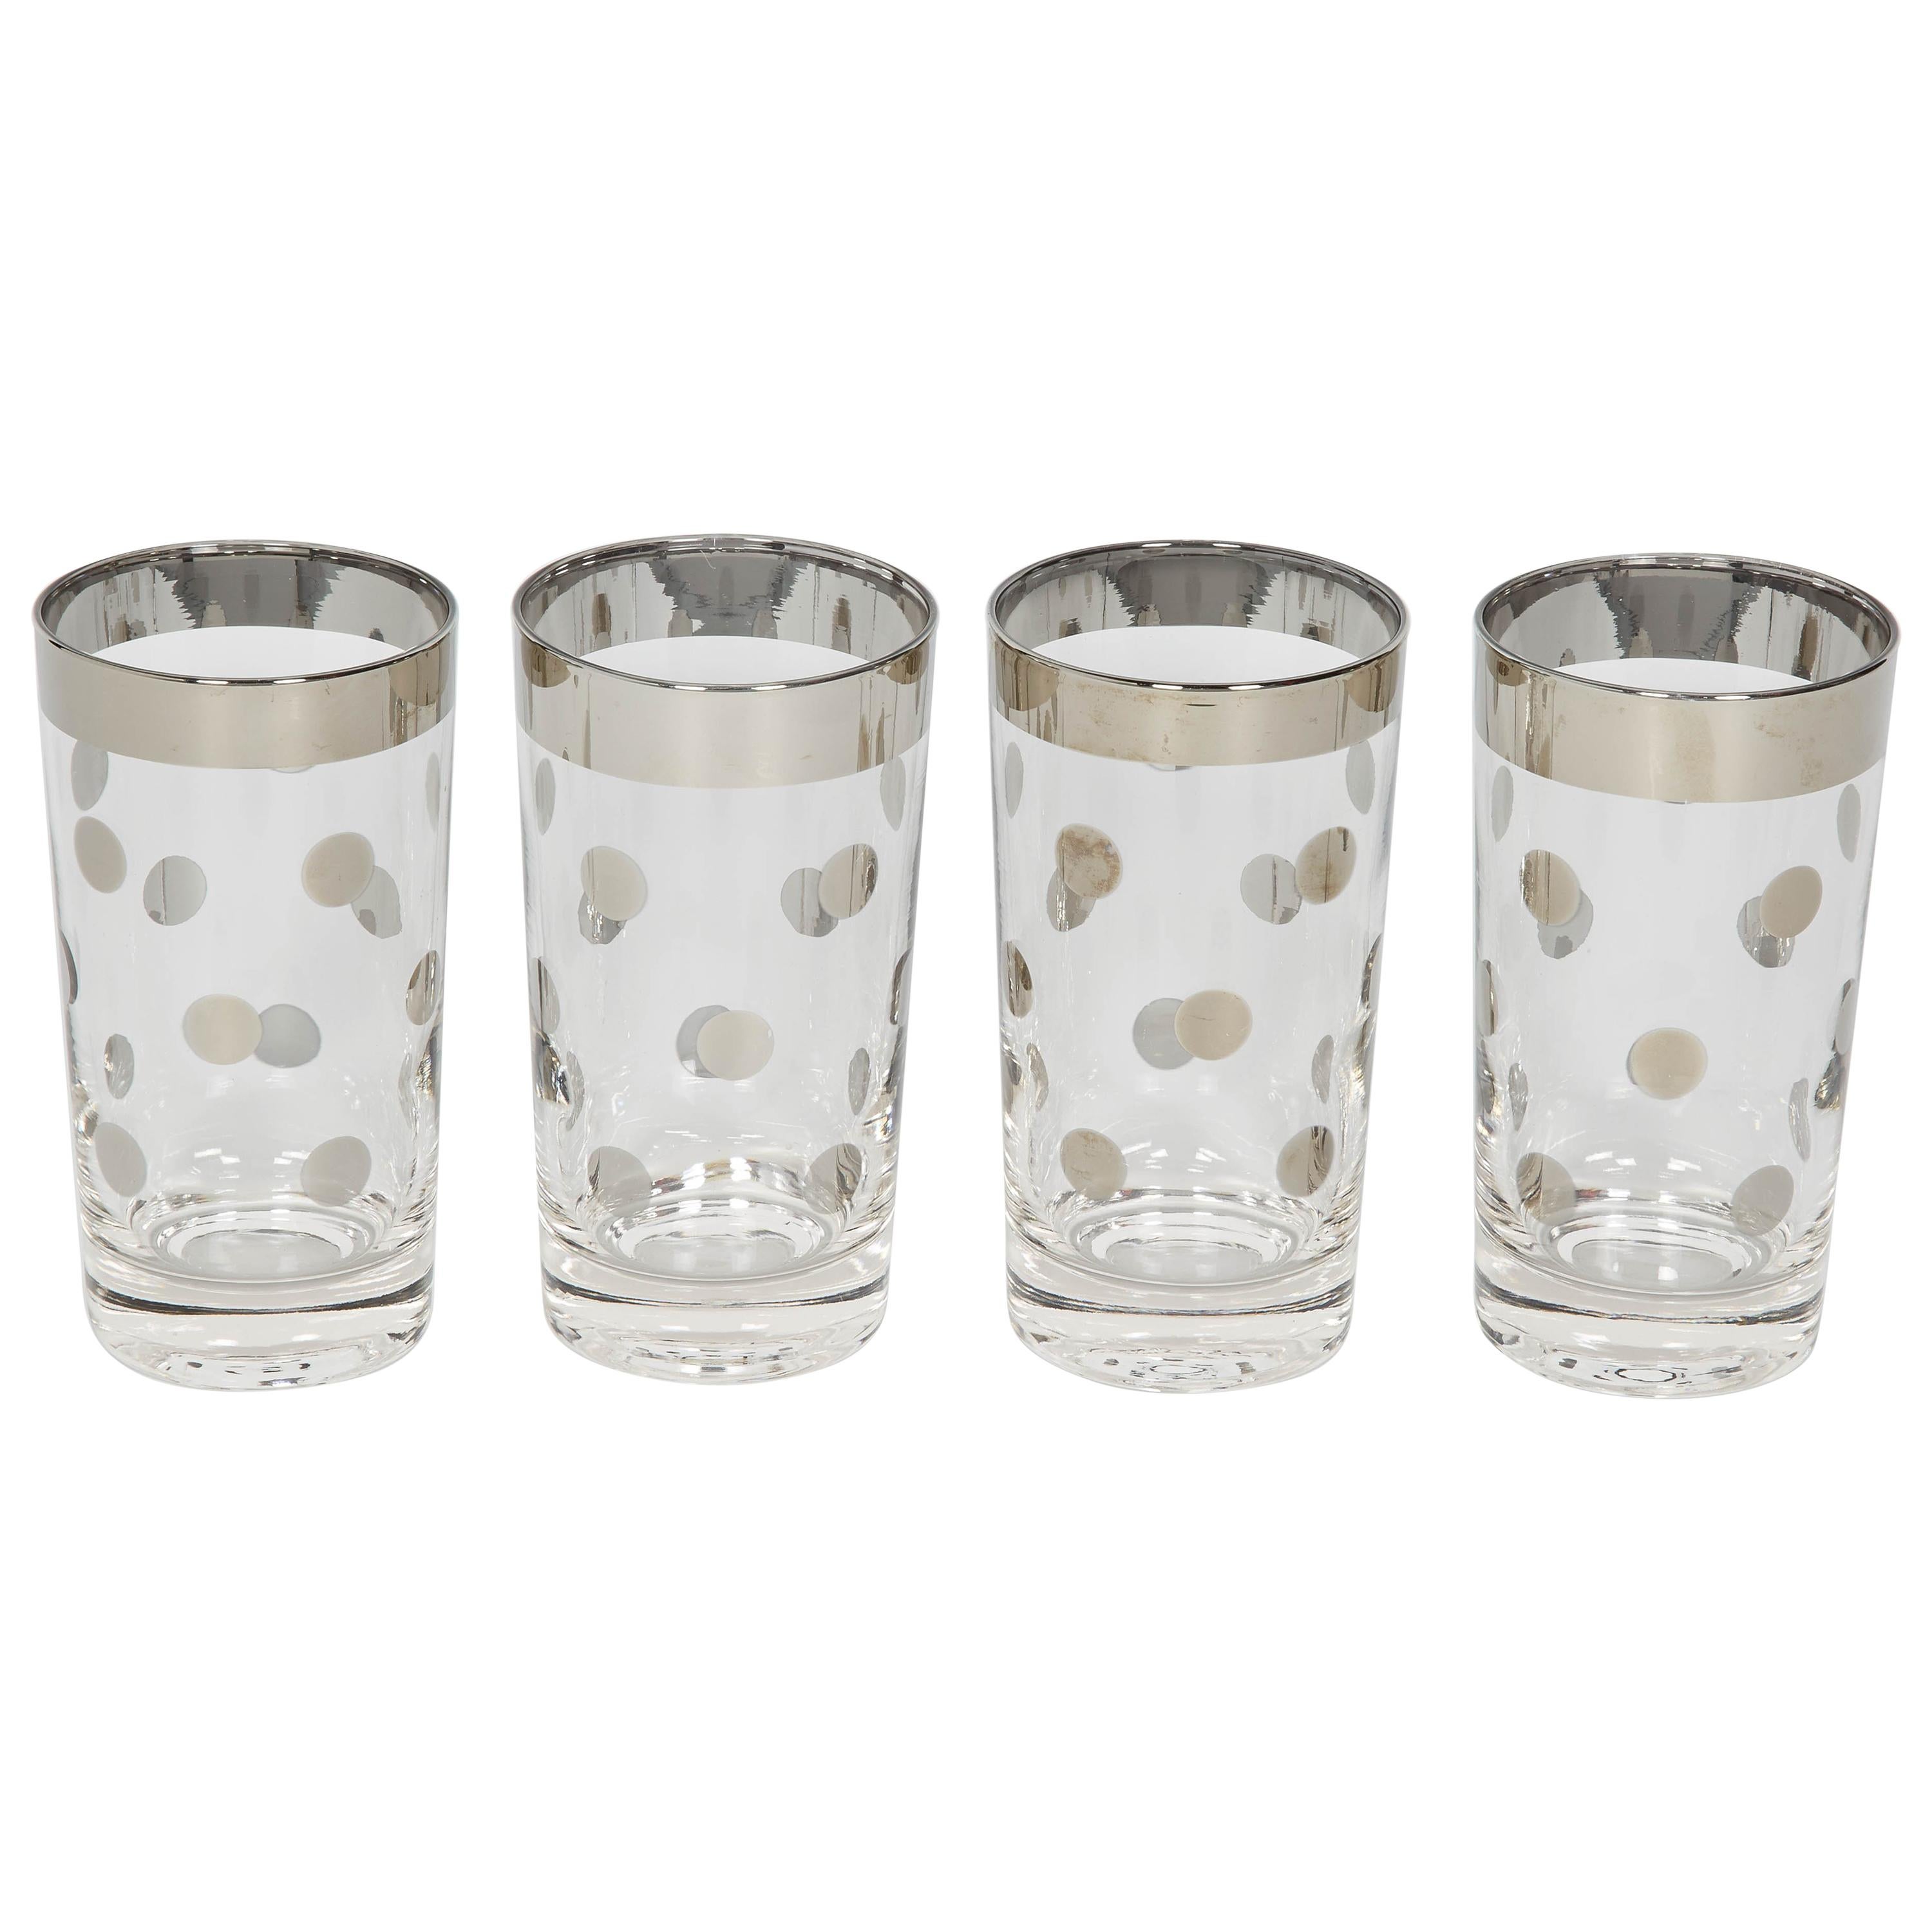 1960s Set of Four Dorothy Thorpe Barware Glasses with Polka Dot Design